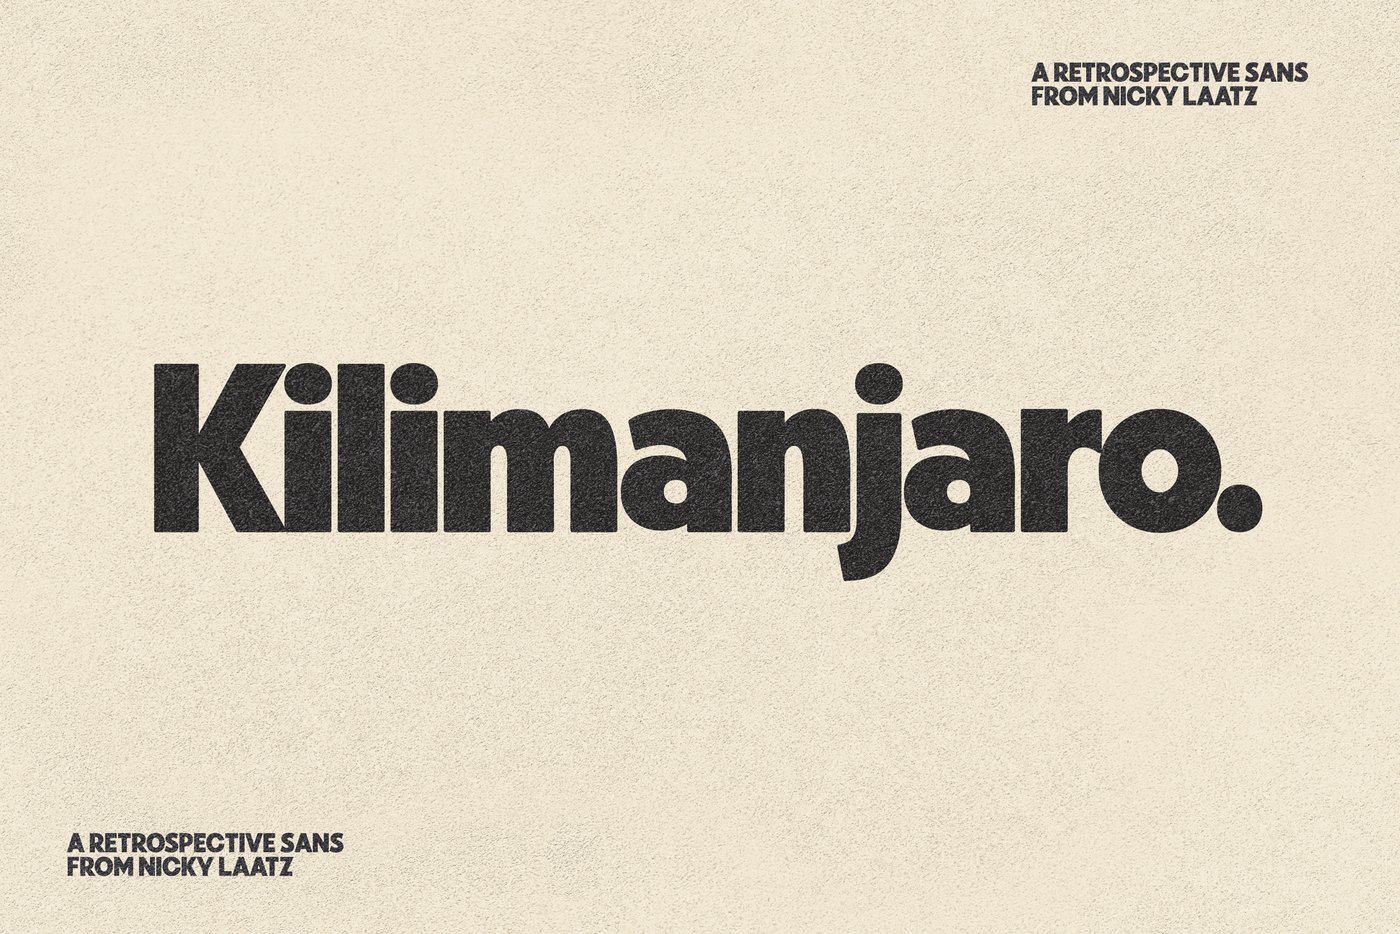 Kilimanjaro Sans main product image by Nicky Laatz